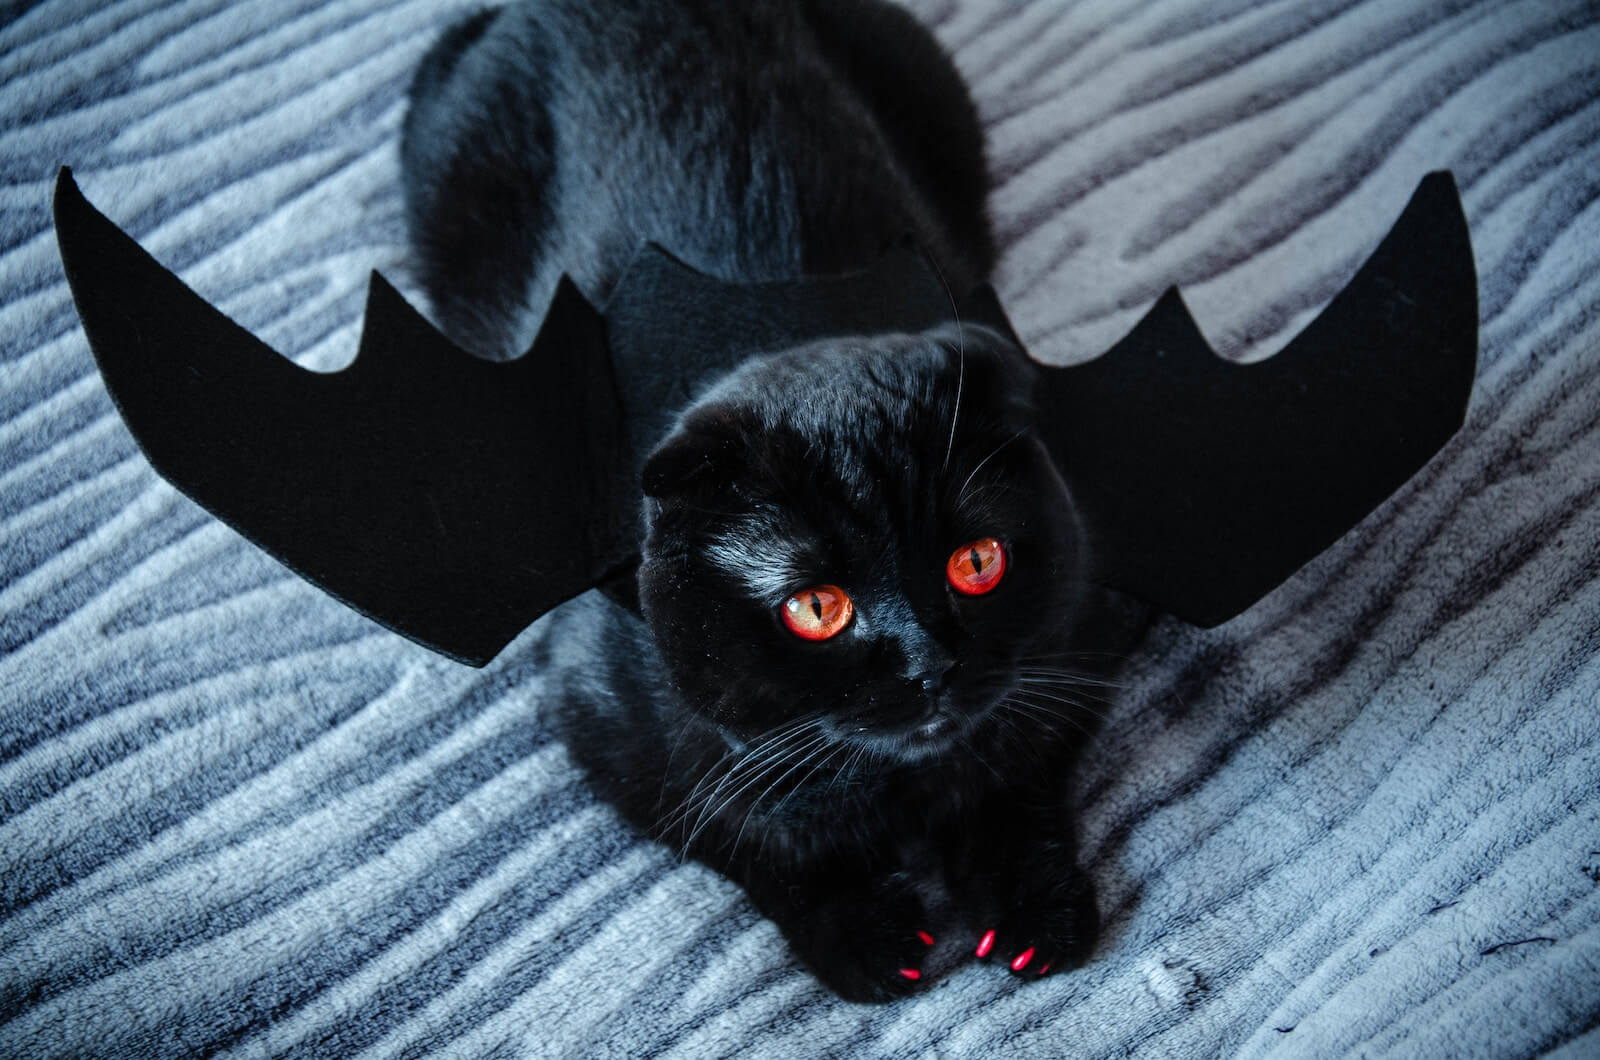 Black cat in bat costume on gray textile